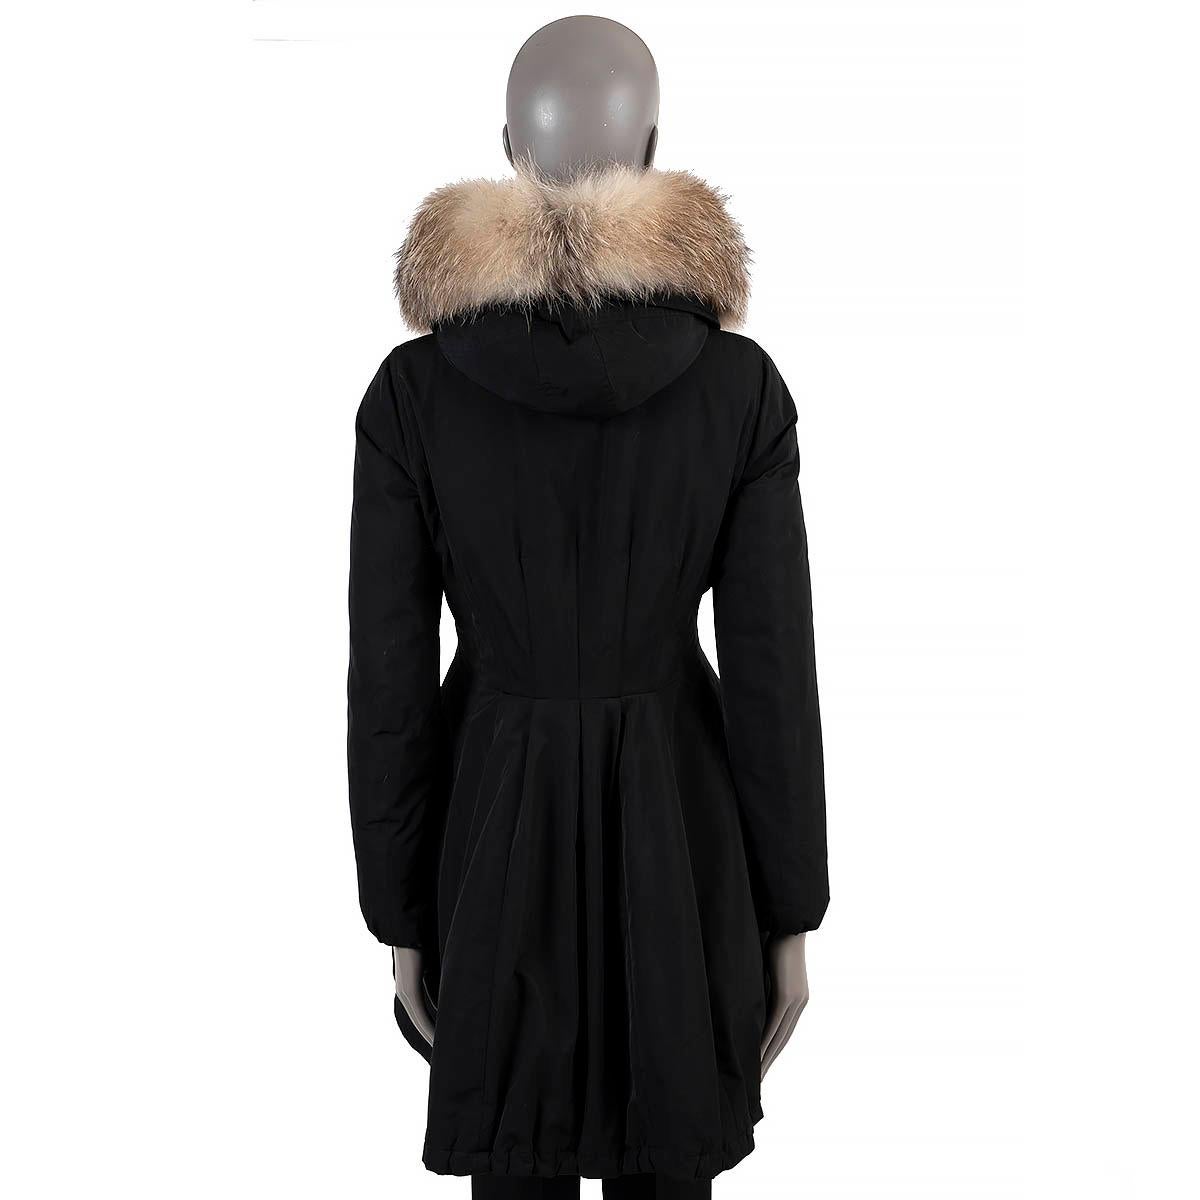 MONCLER black AREDHEL FUR TRIM DOWN PARKA Coat Jacket 2 M In Excellent Condition For Sale In Zürich, CH